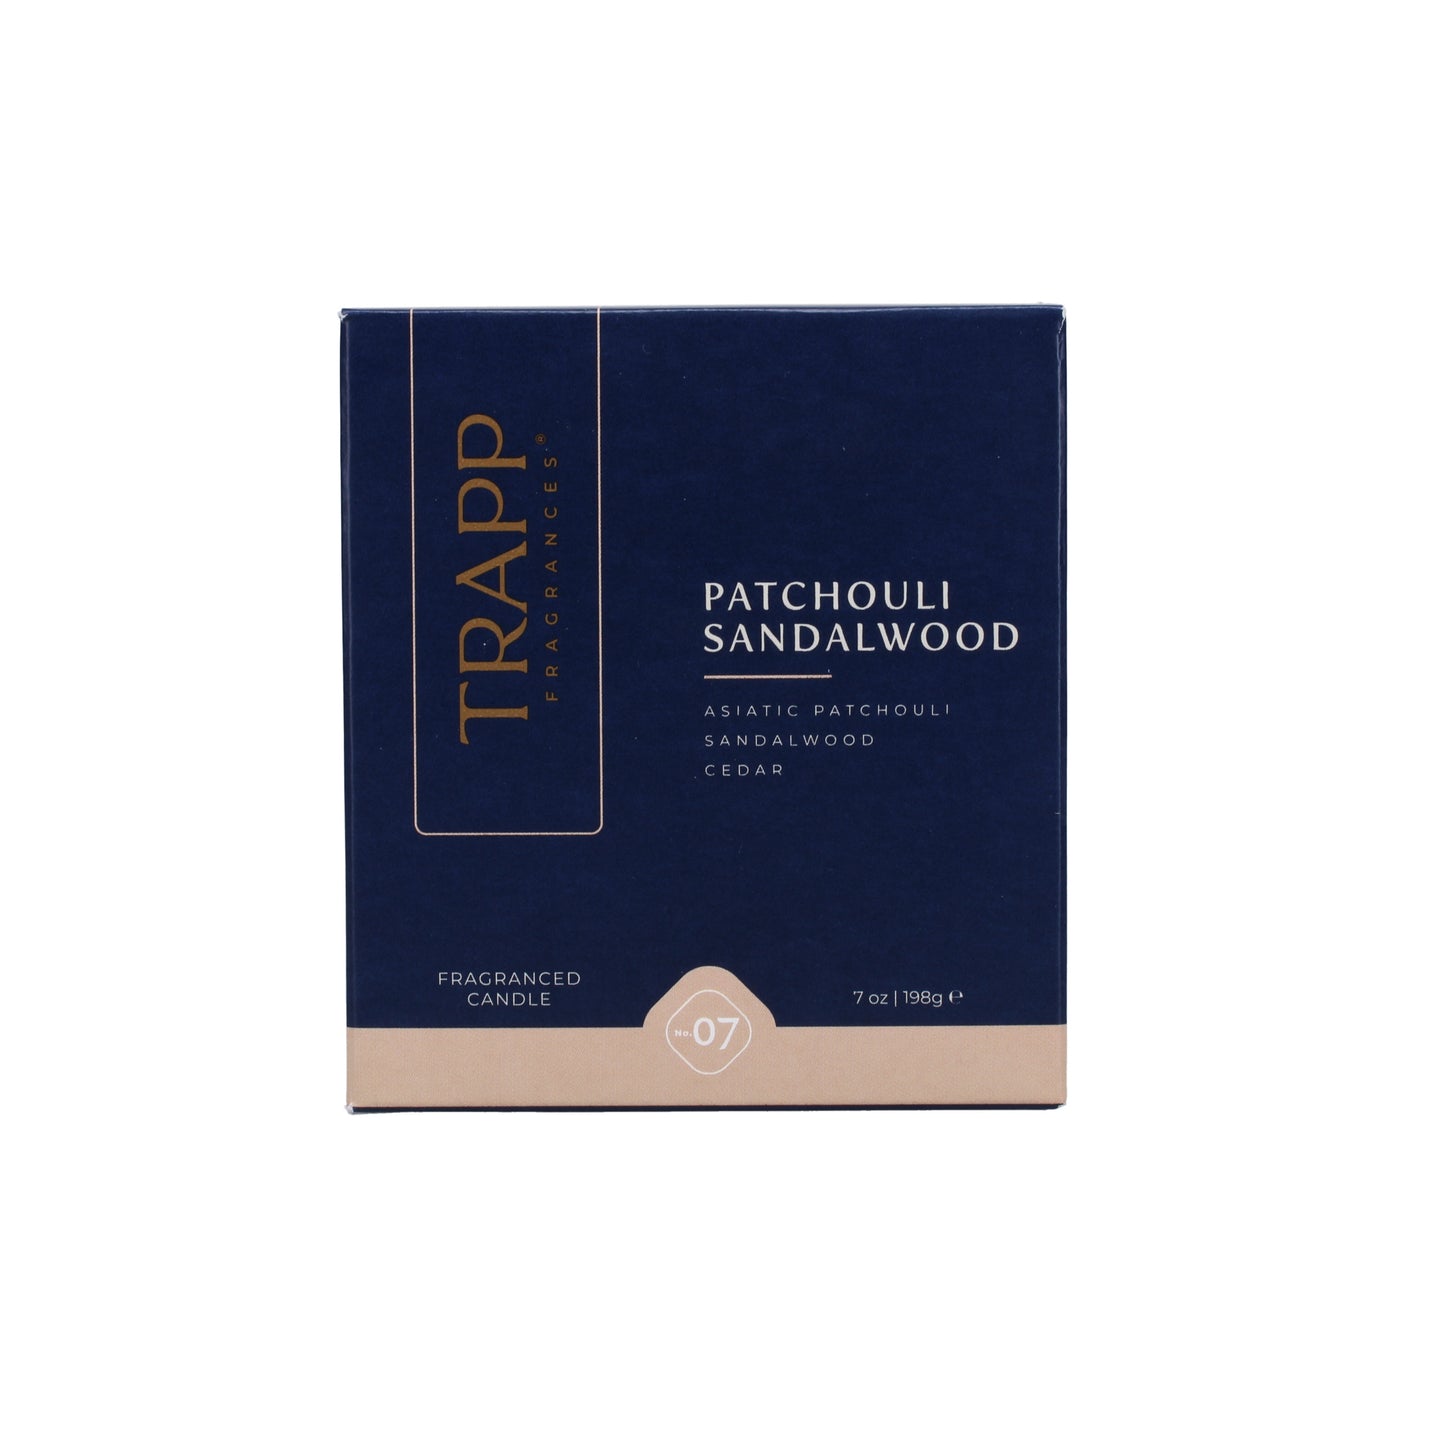 No. 07 Patchouli Sandalwood 7 oz. Candle in Signature Box Image 3